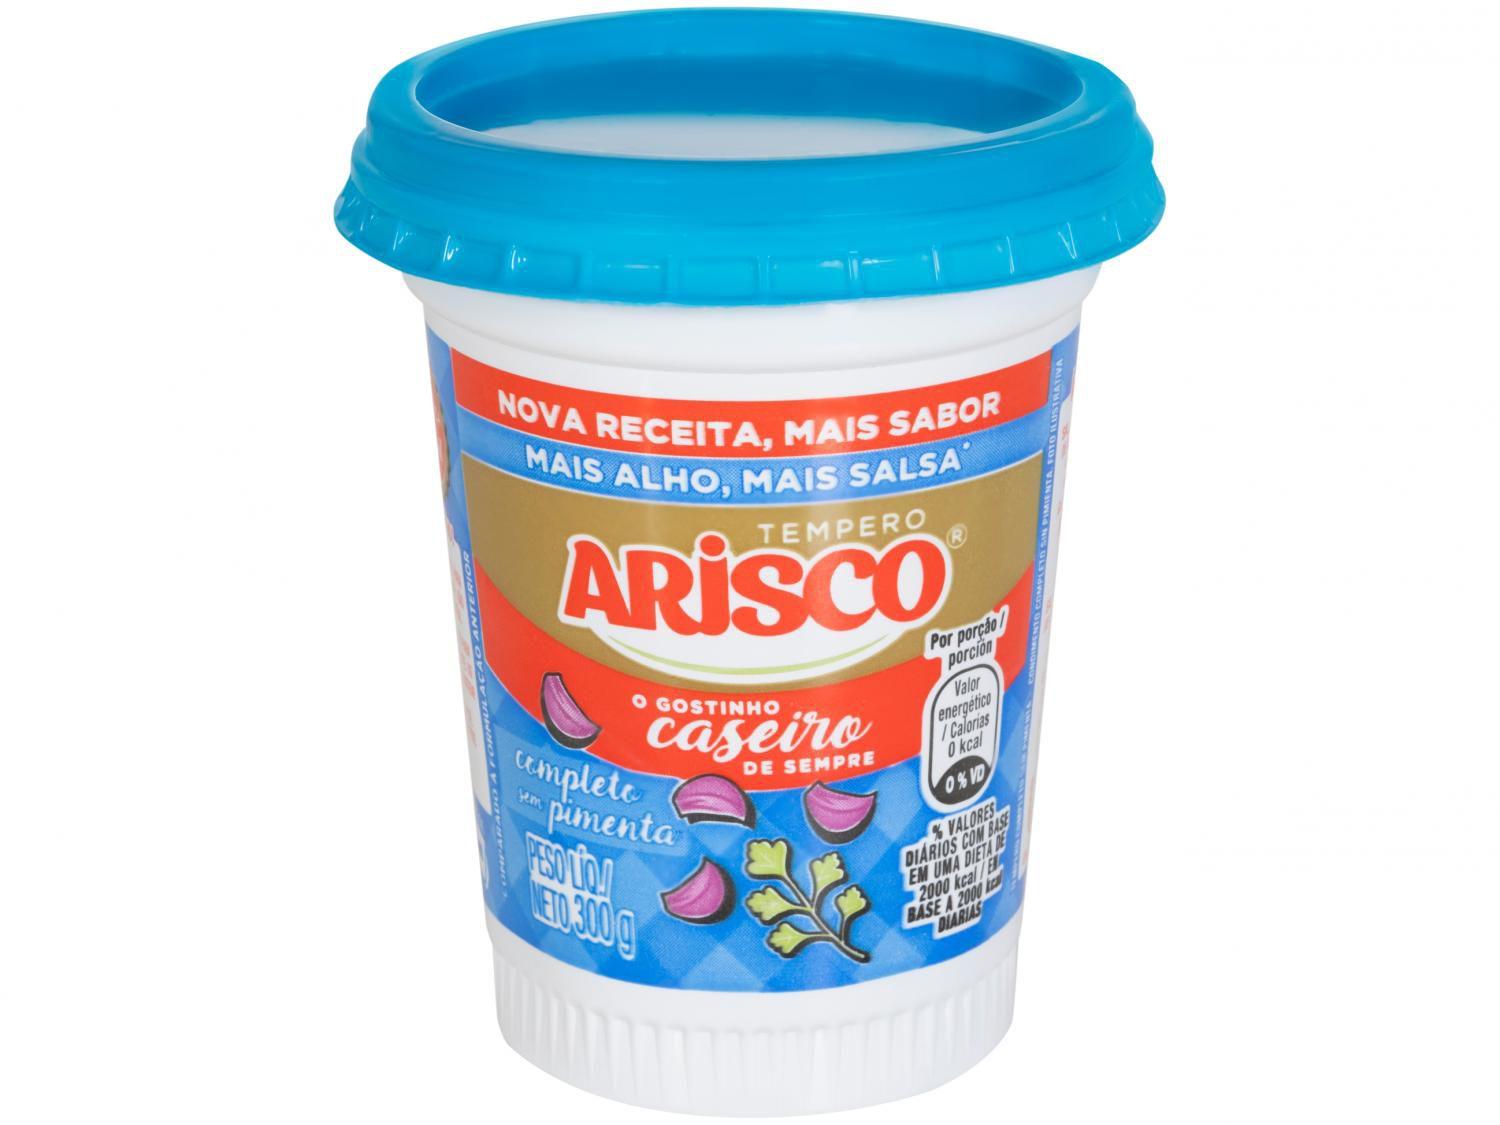 Tempero Arisco Completo sem Pimenta - 300g